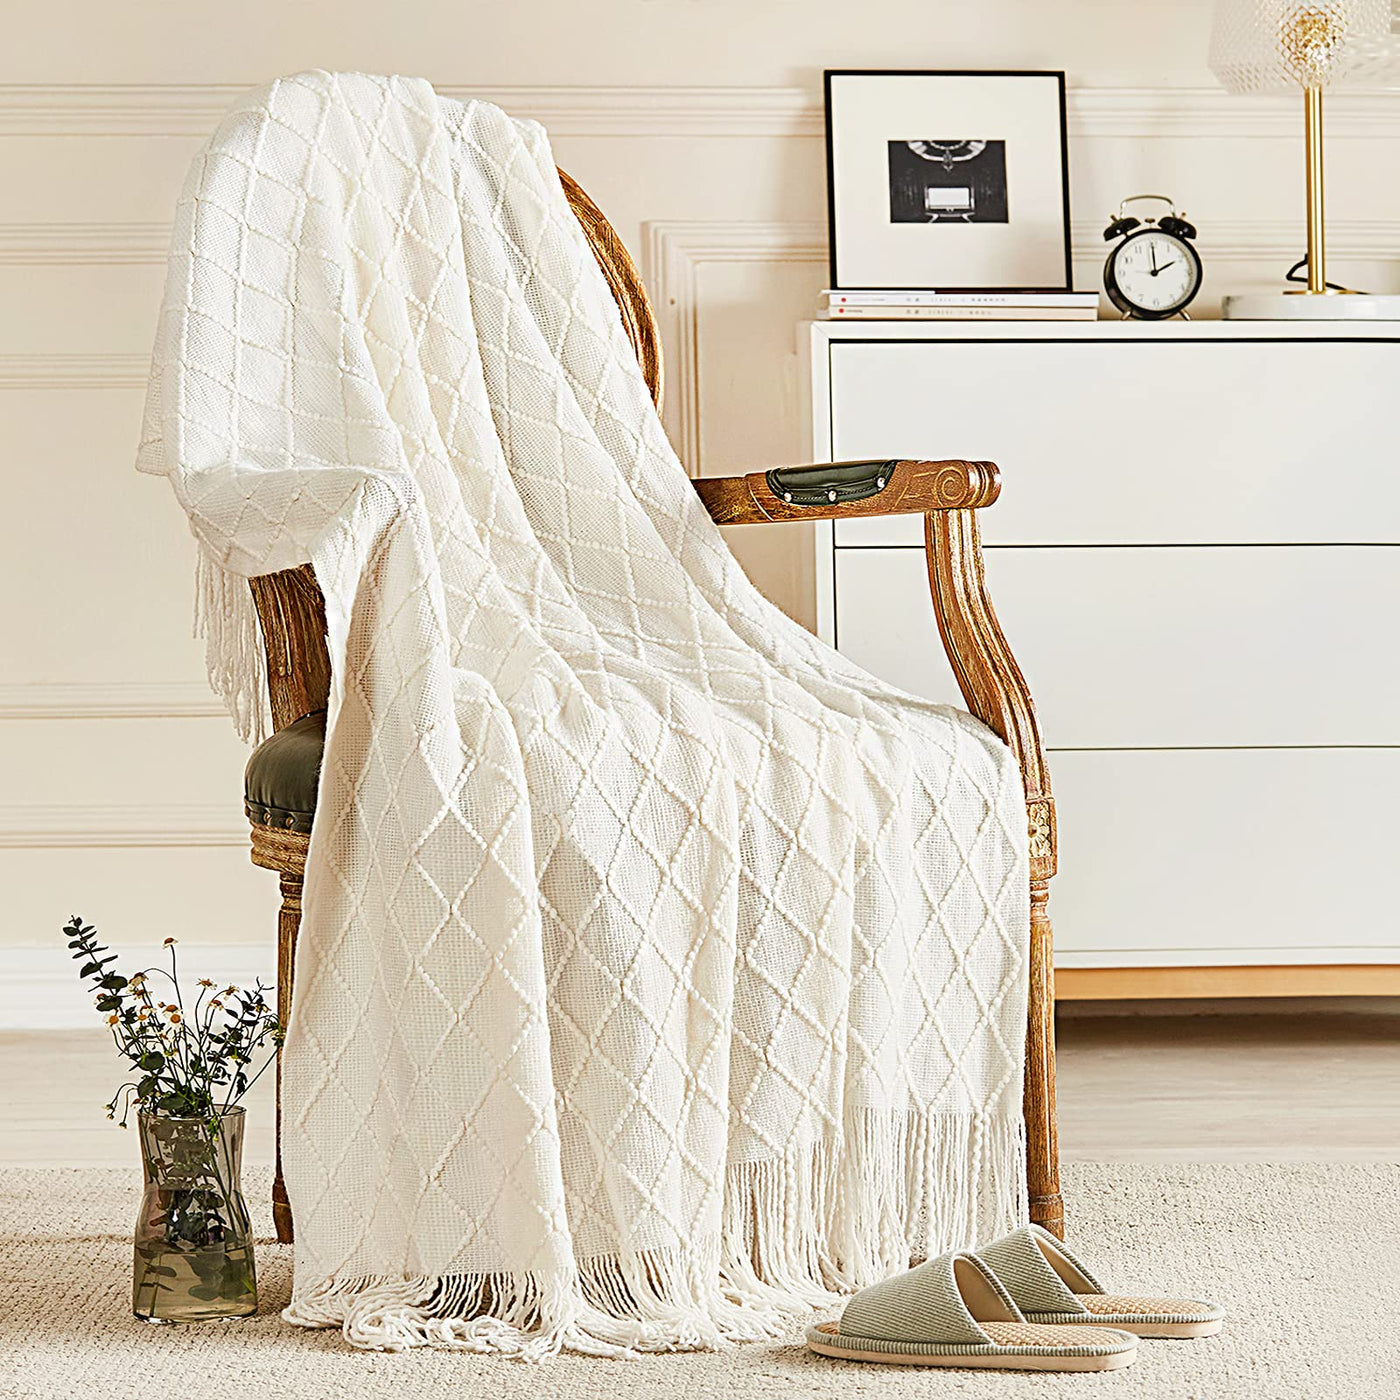 'Elara' Nordic Style Cotton Knitted Sofa Blanket